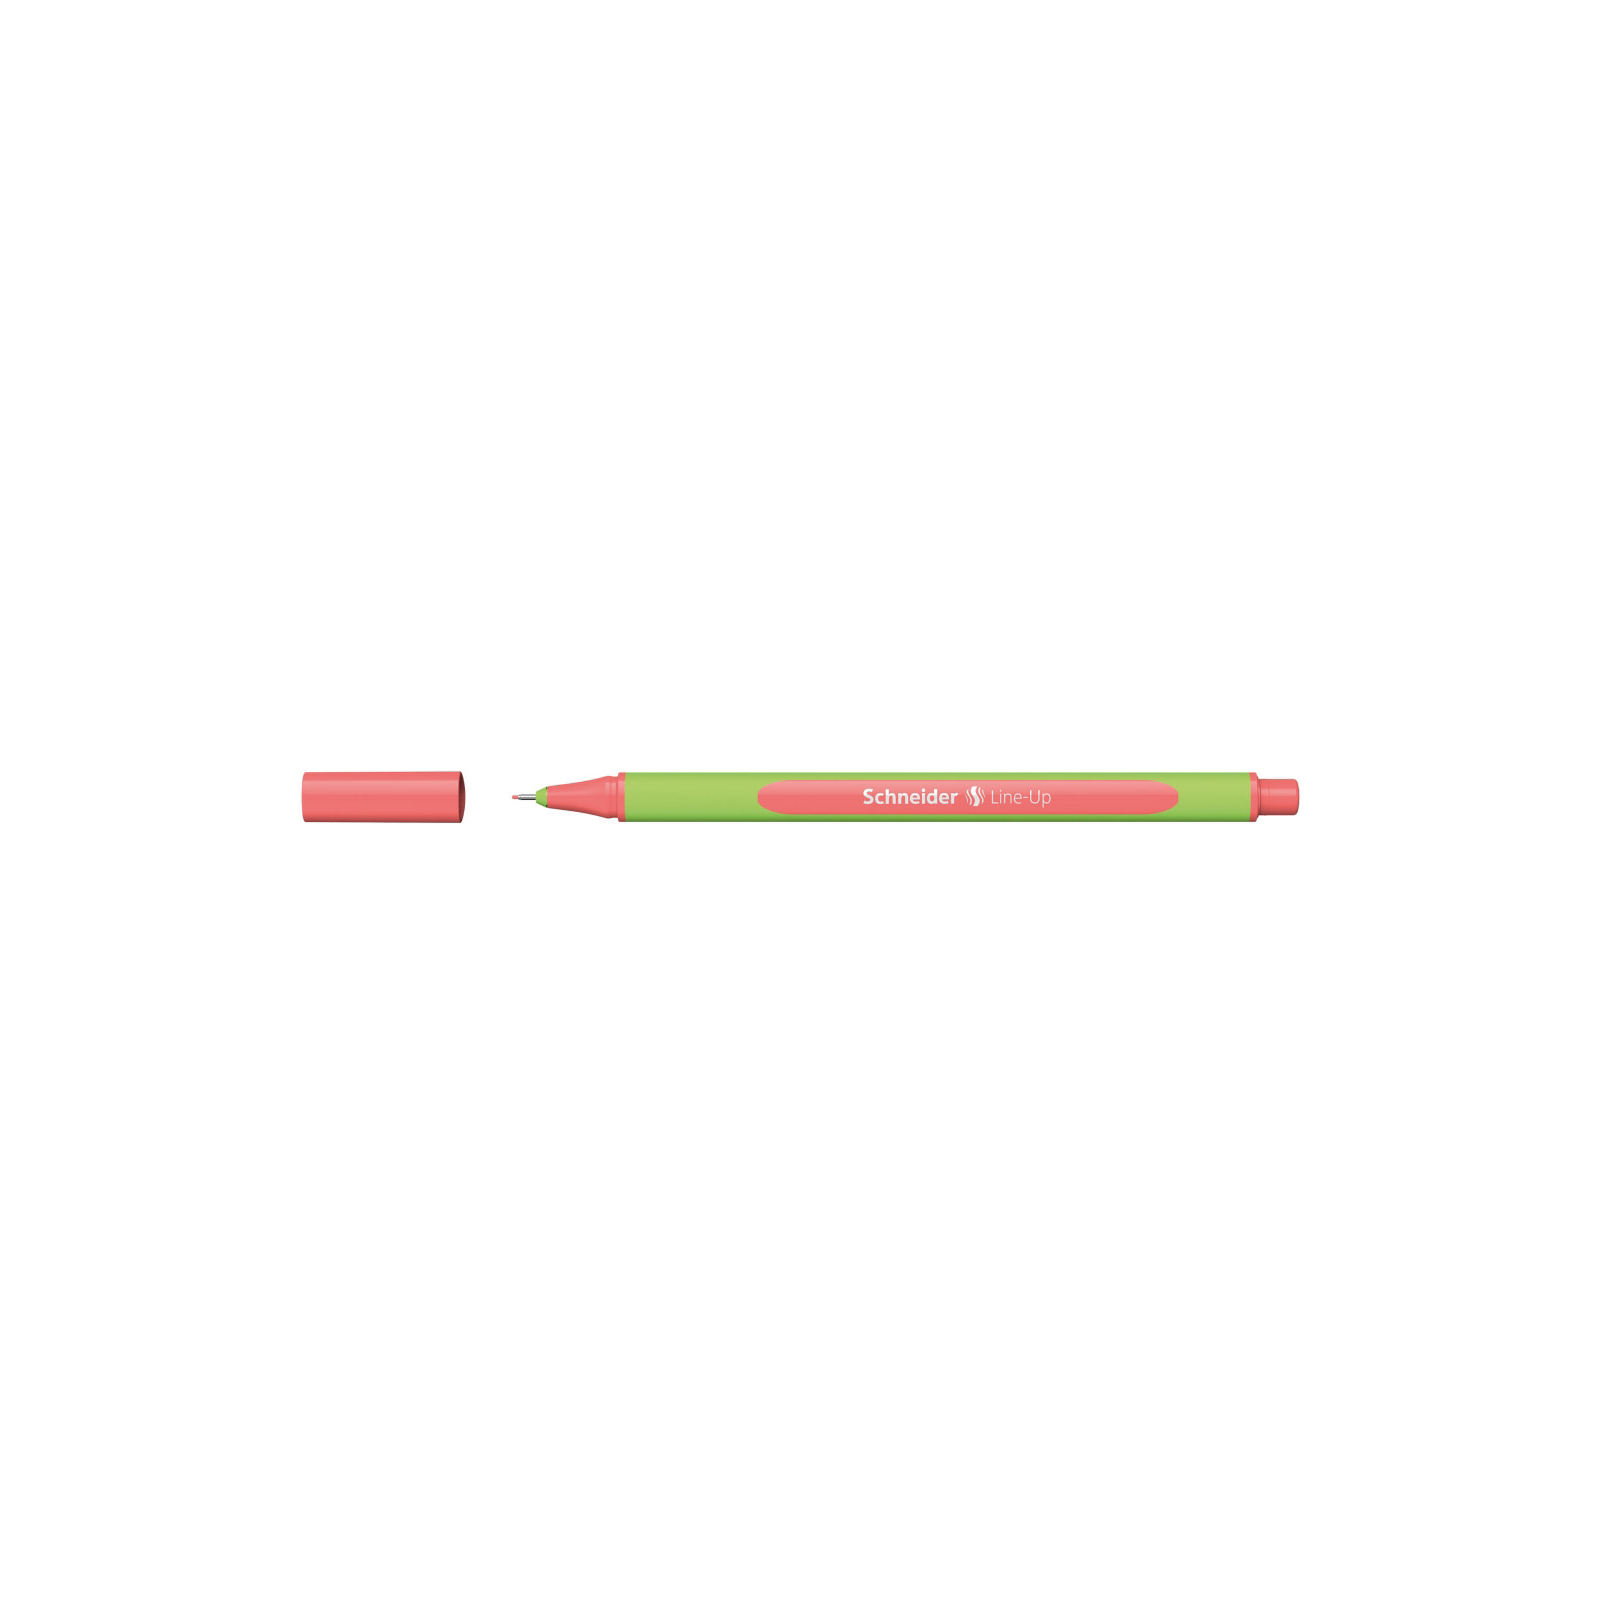 Лайнер Schneider Line-Up 0,4 мм pink (S191009) изображение 3